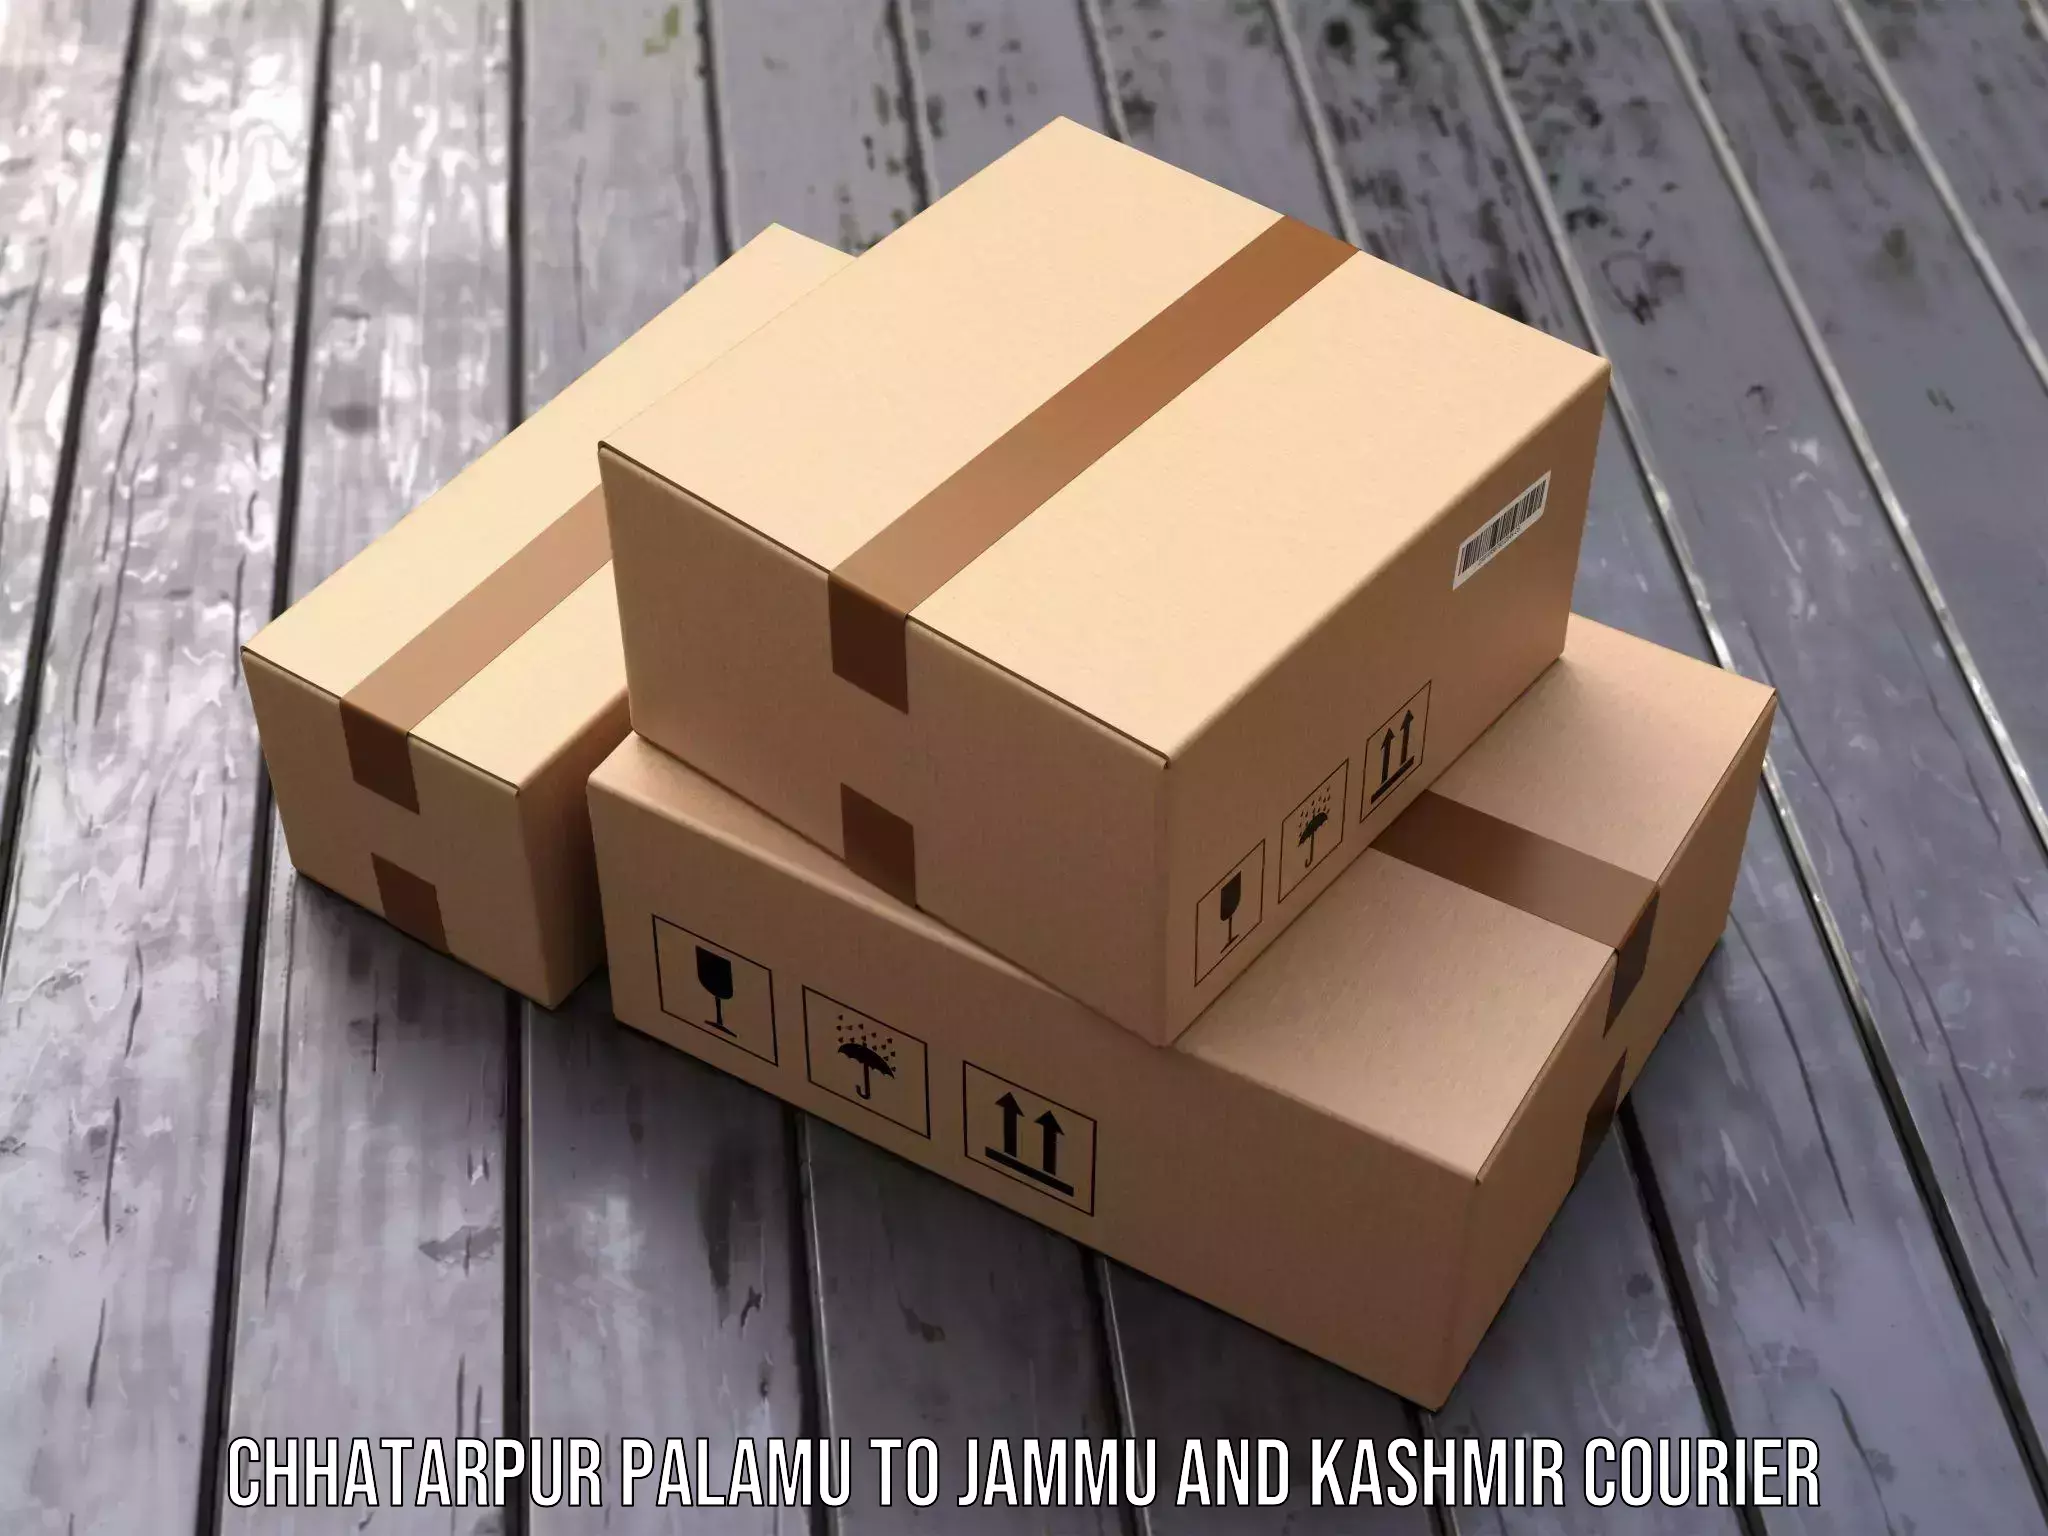 Small business couriers Chhatarpur Palamu to Srinagar Kashmir